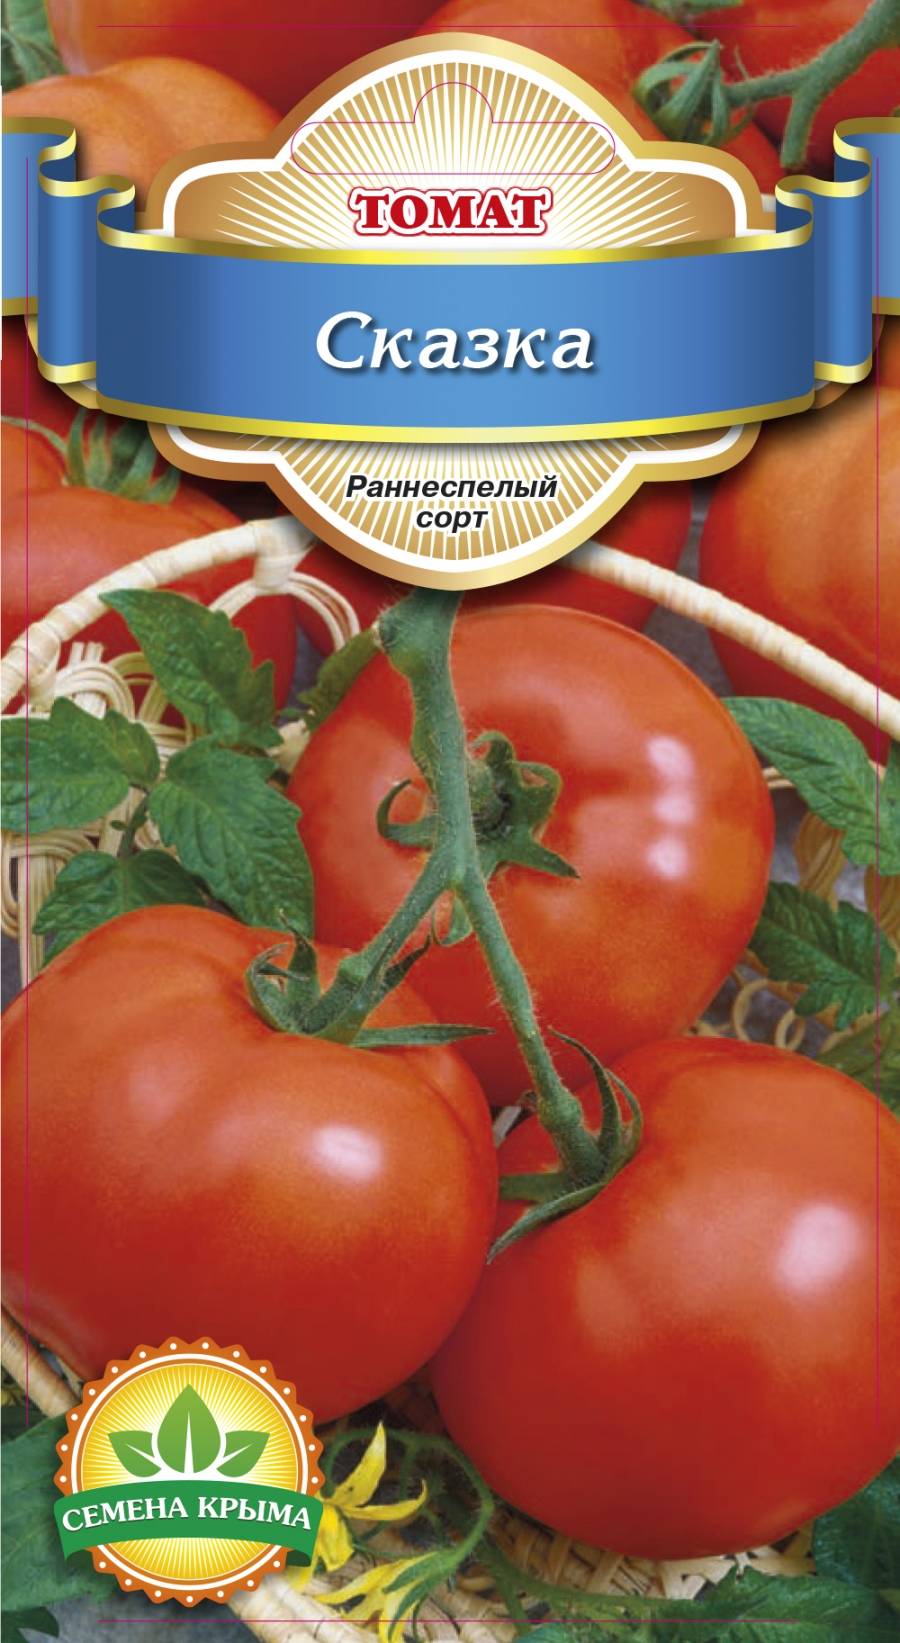 Томат "клубничное дерево": фото и описание, рекомендации по уходу за помидорами